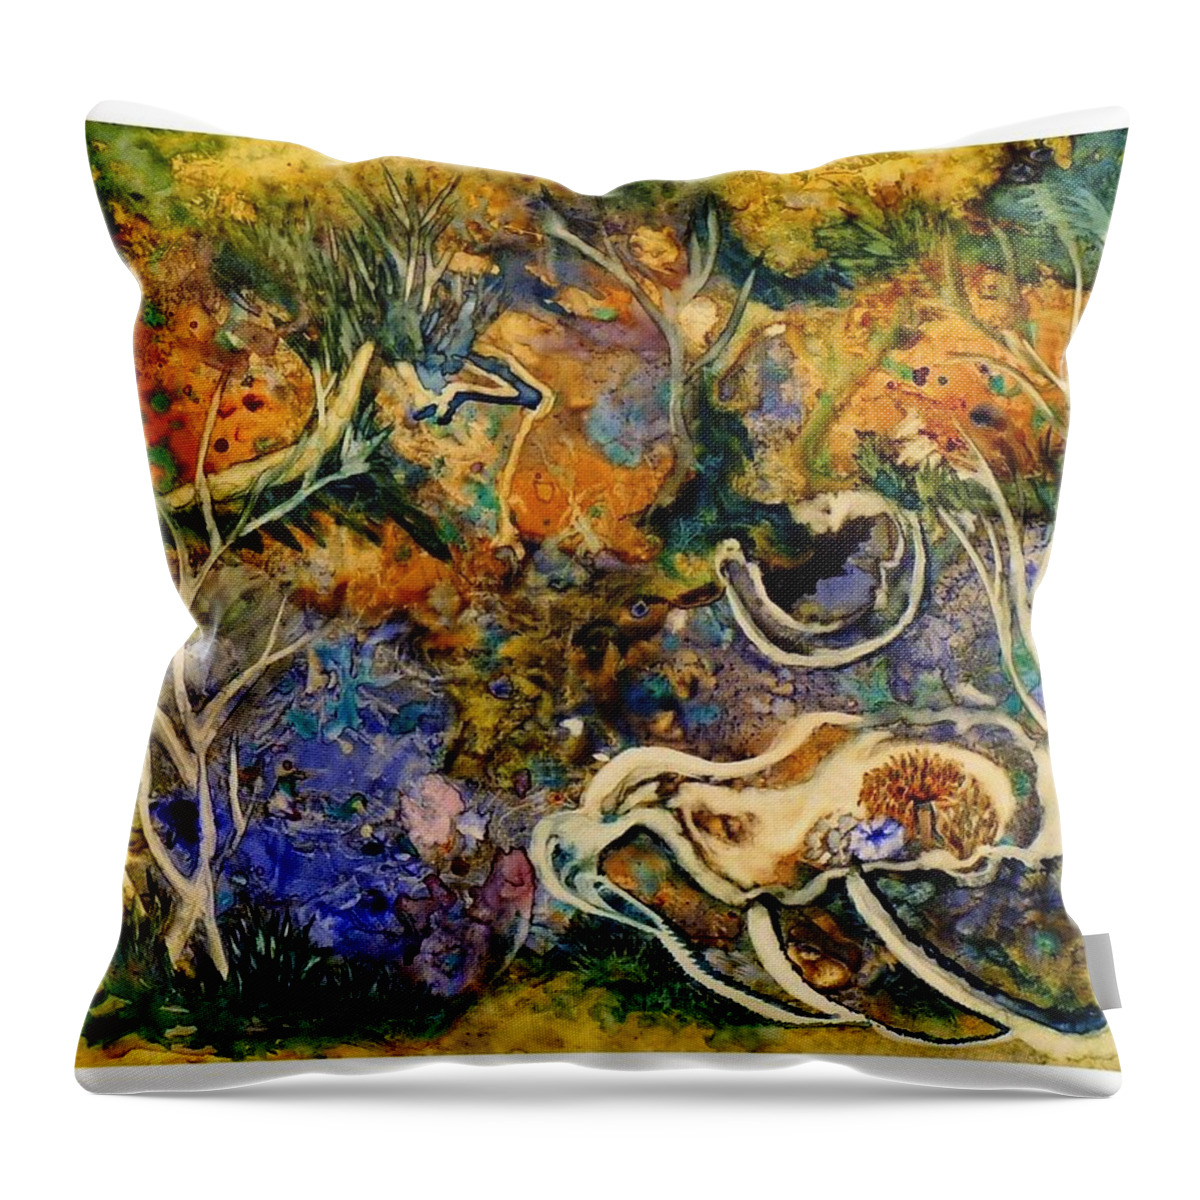 Ksg Throw Pillow featuring the painting Monet Under Water by Kim Shuckhart Gunns